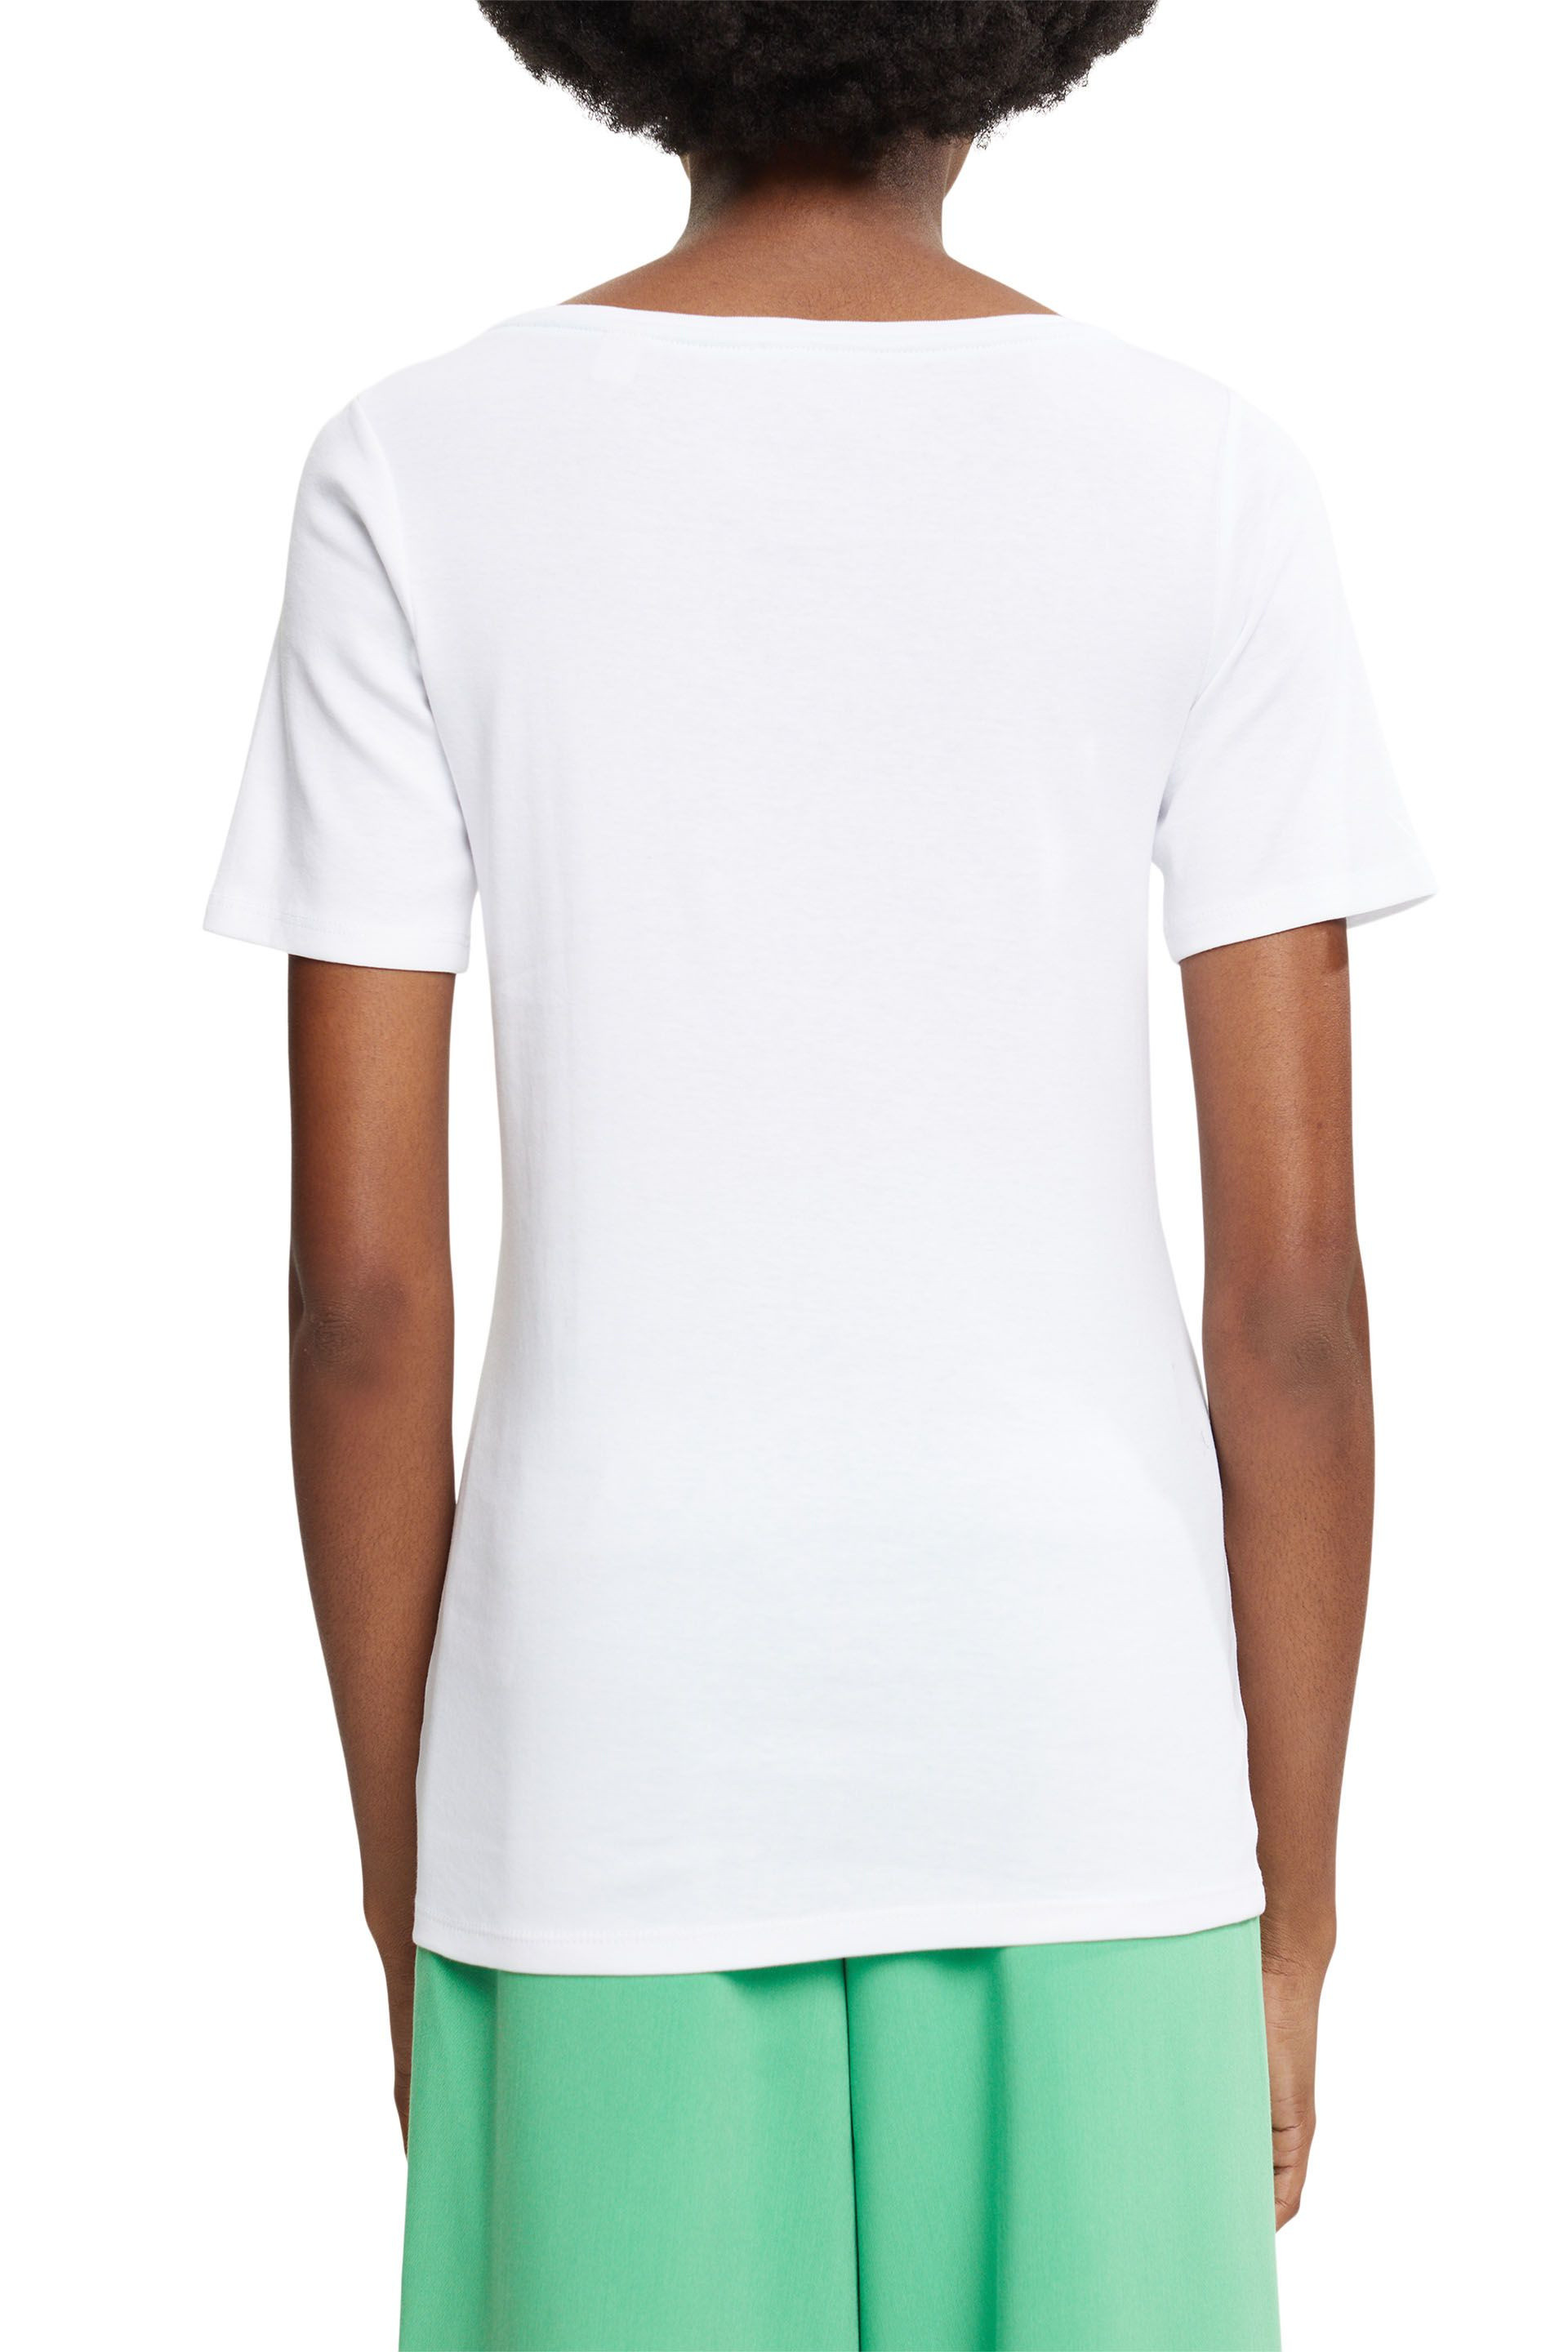 Esprit - Cotton logo T-shirt, White, large image number 2